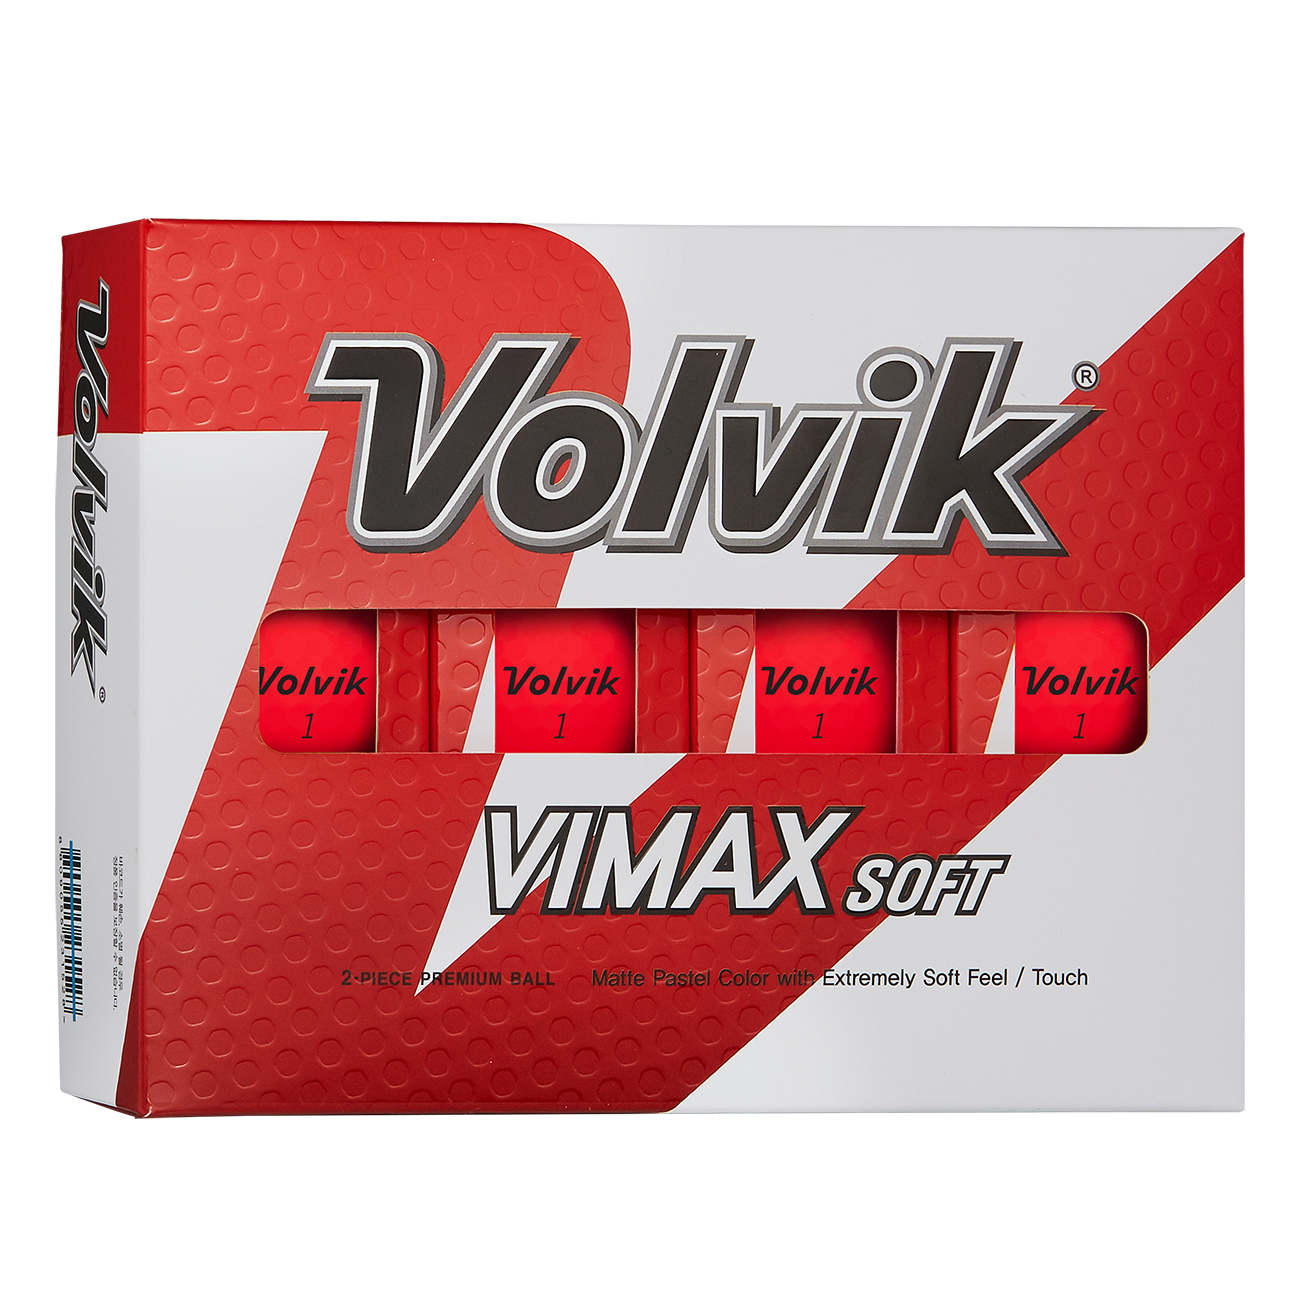 ViMax Soft Red Golf Balls